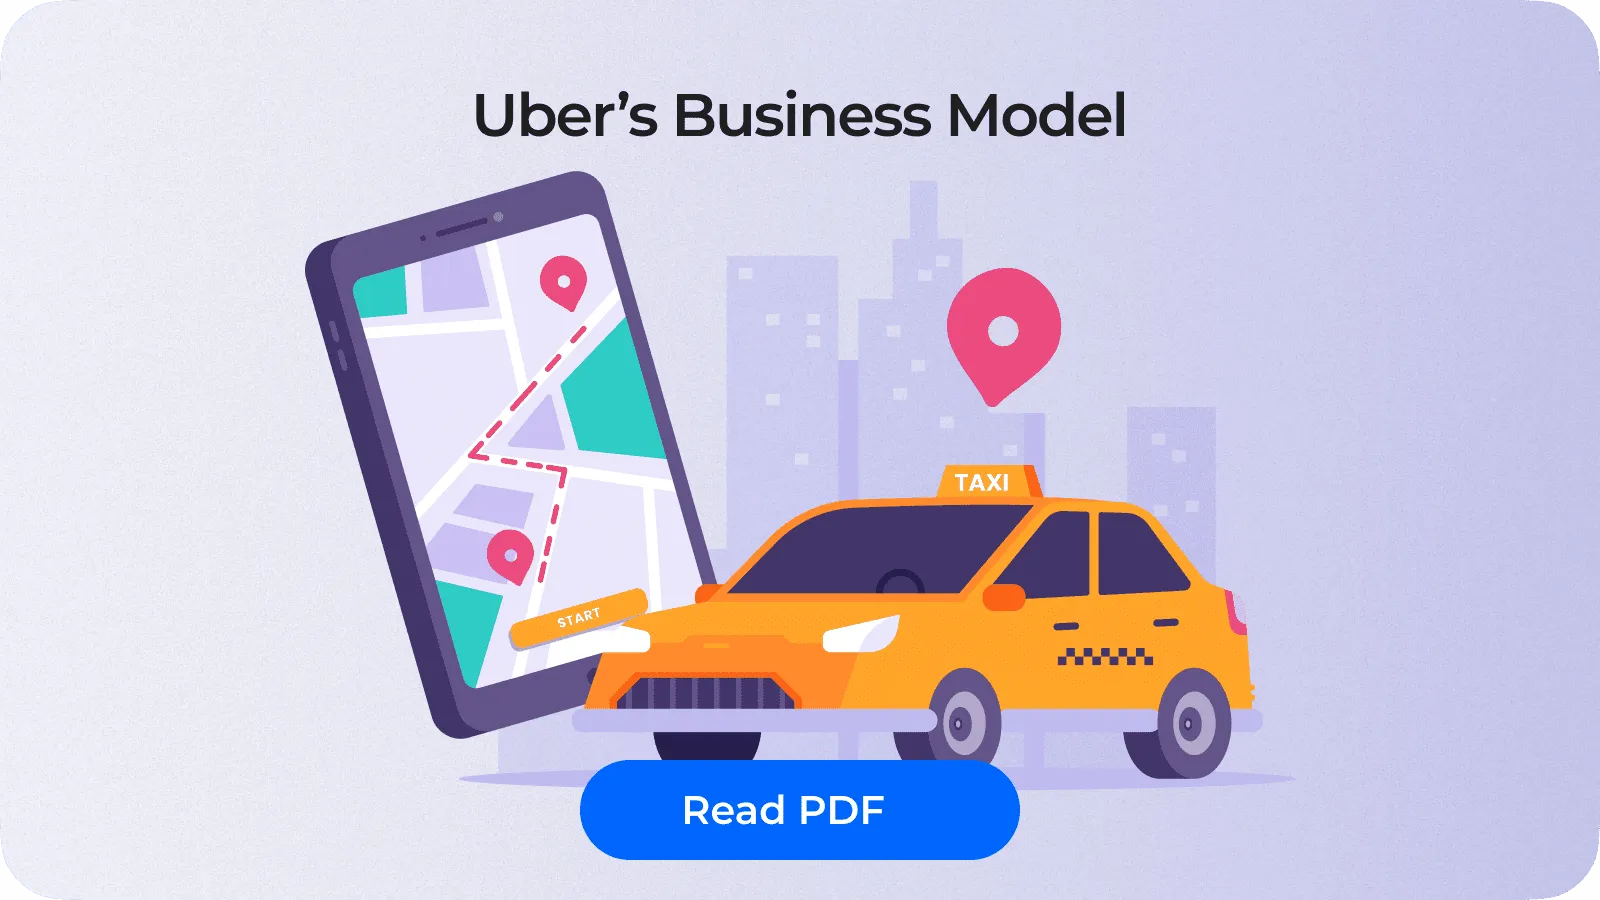 Uber's Business Model Canvas